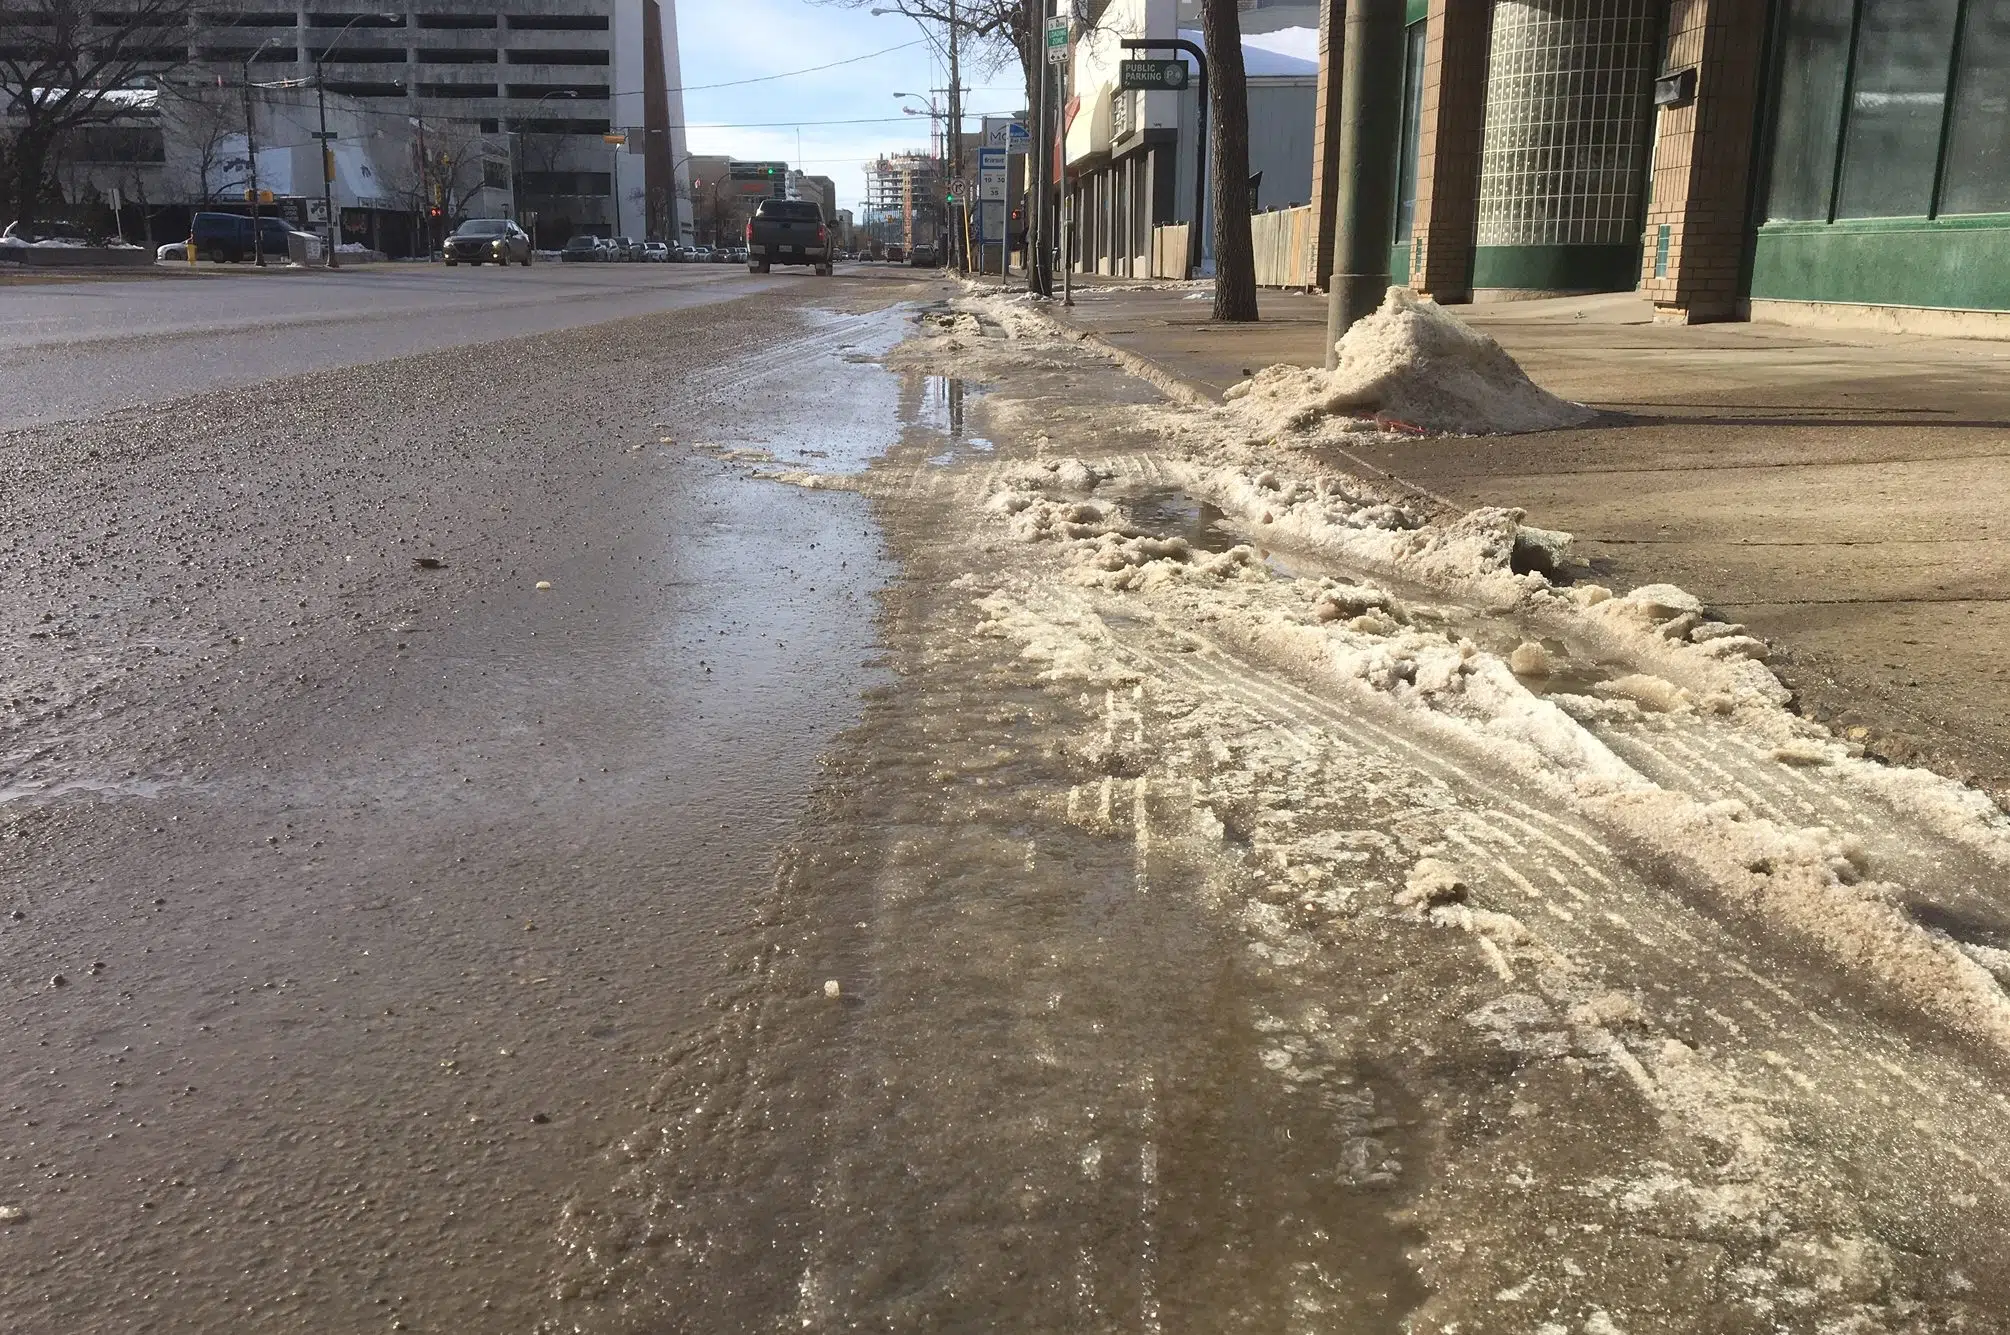 City of Saskatoon provides tips to avoid flooding